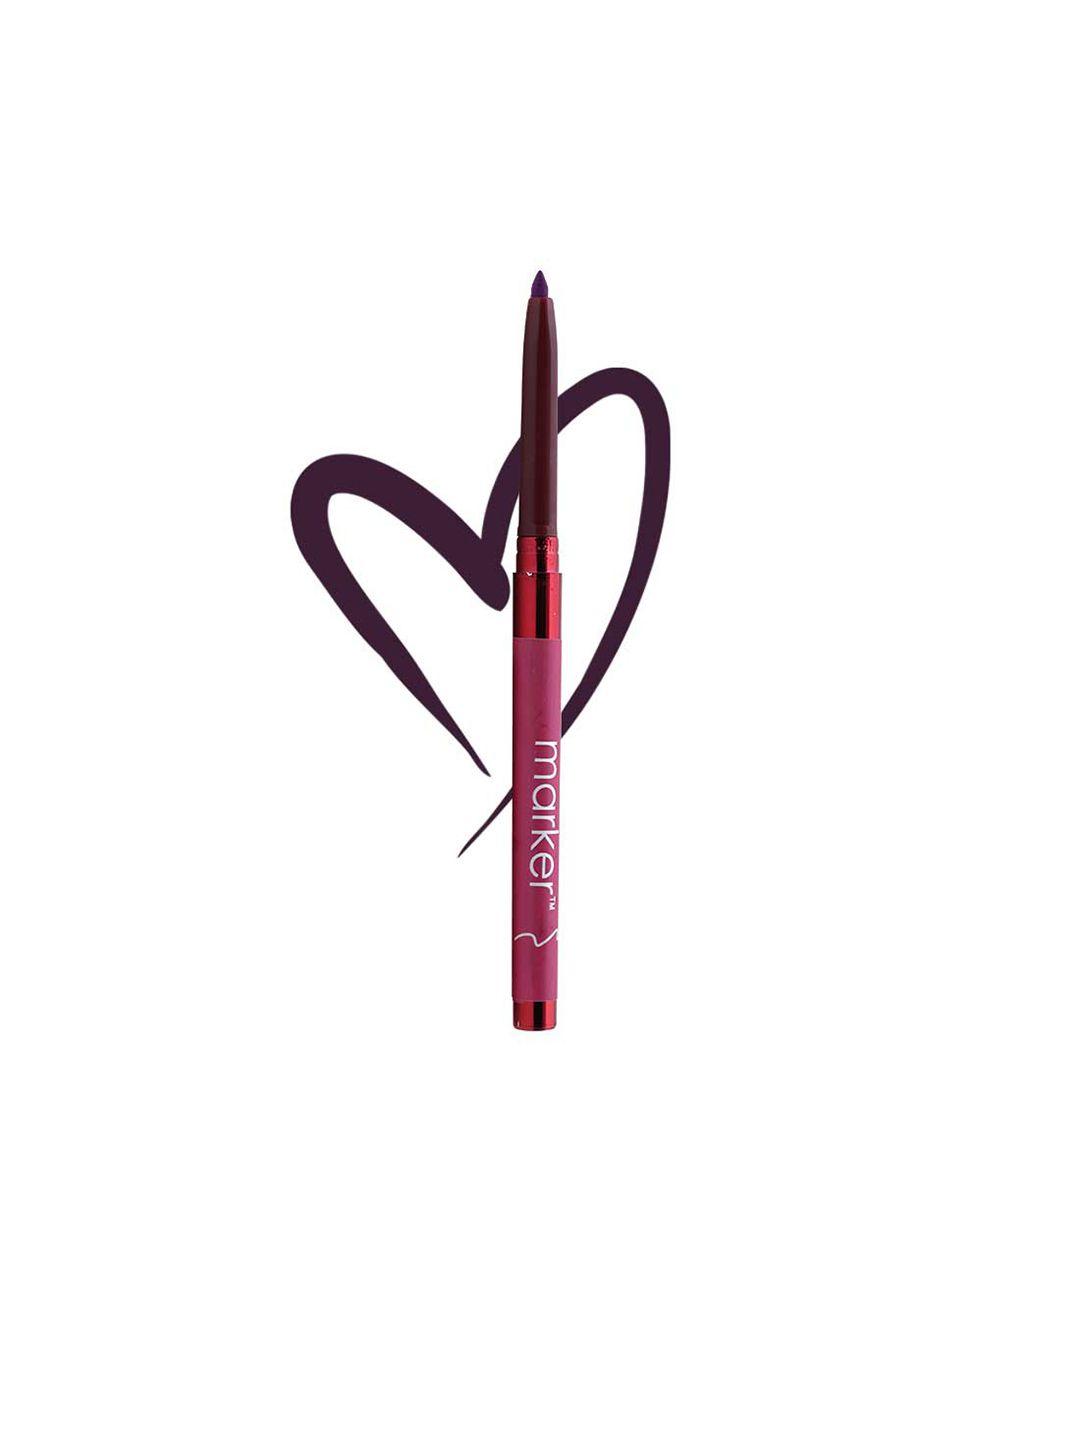 beautyrelay london outline the lips long-lasting lip liner with vitamin e 0.27g - plum wine